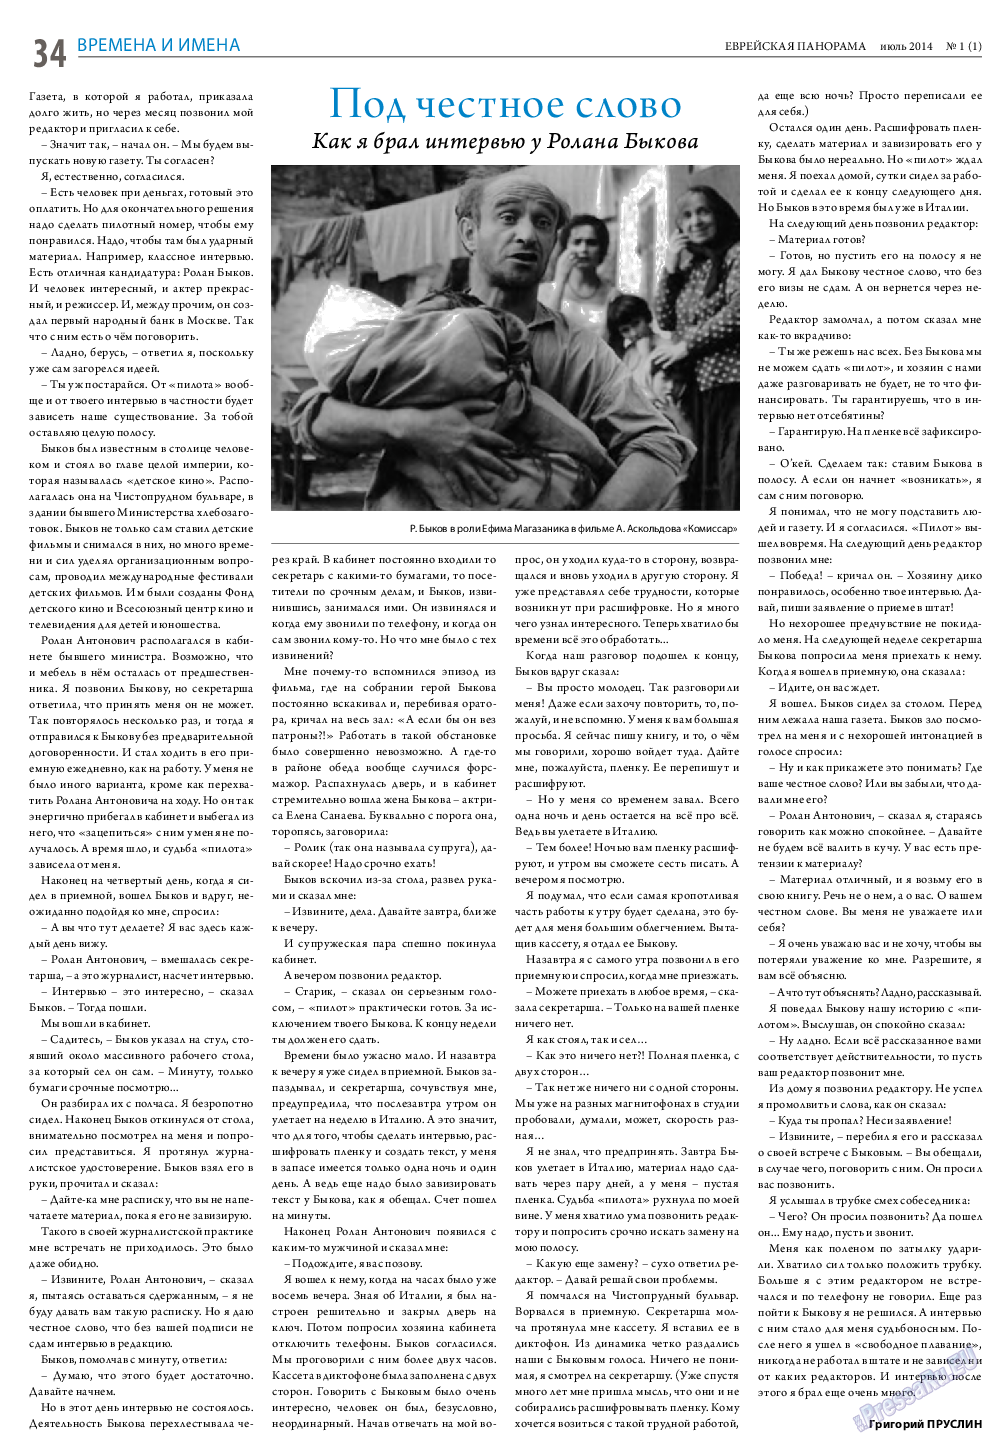 Еврейская панорама, газета. 2014 №1 стр.34